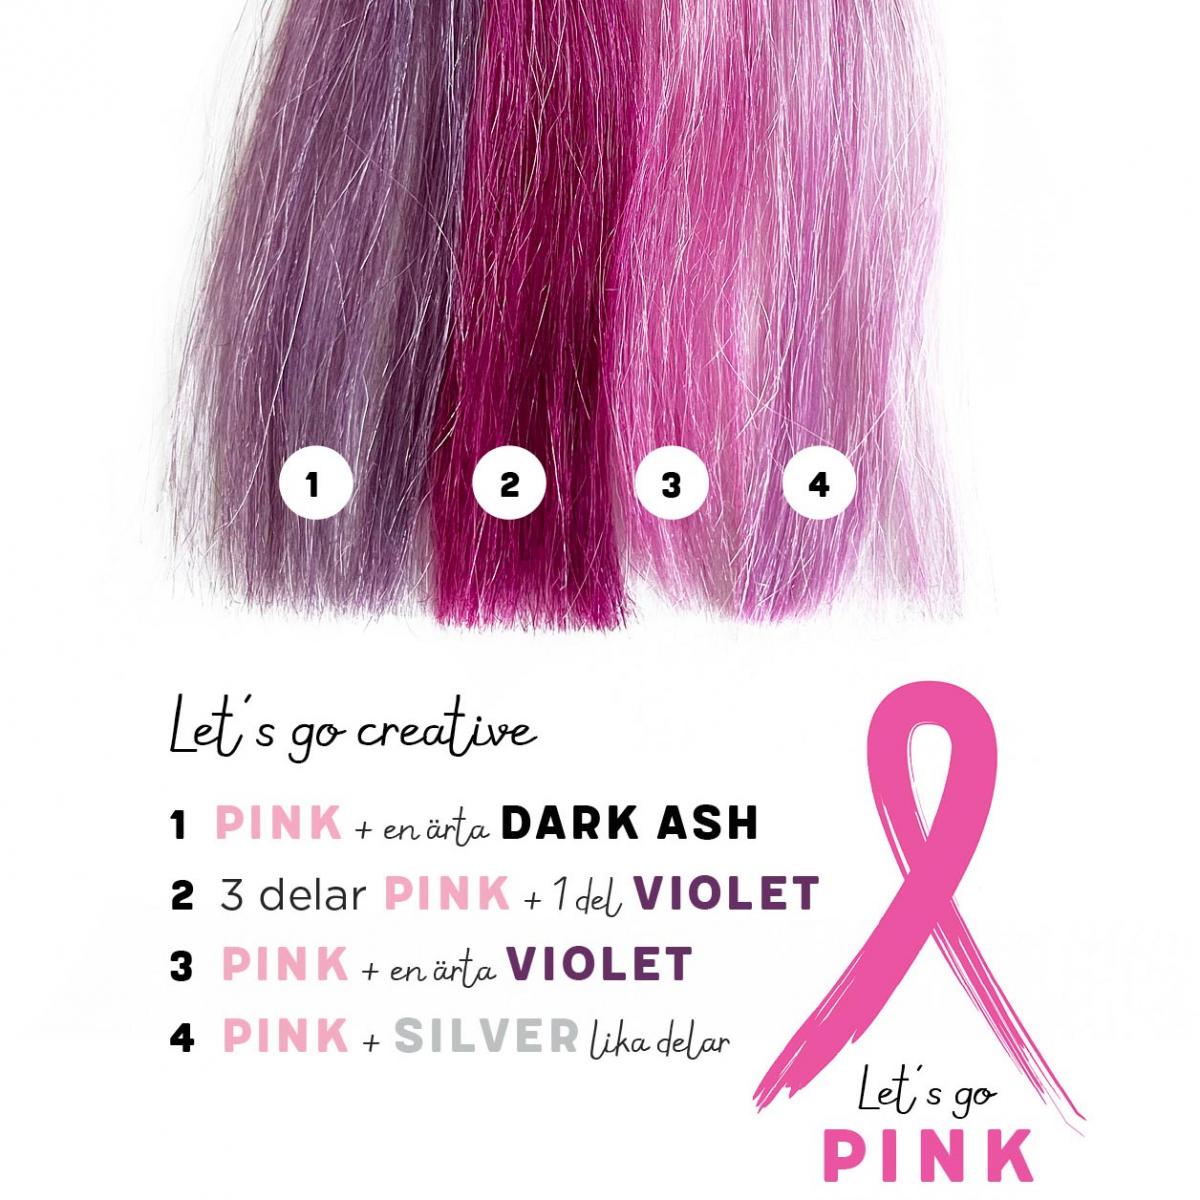 Treat My Color Dark Ash 250ml - Hairsale.se